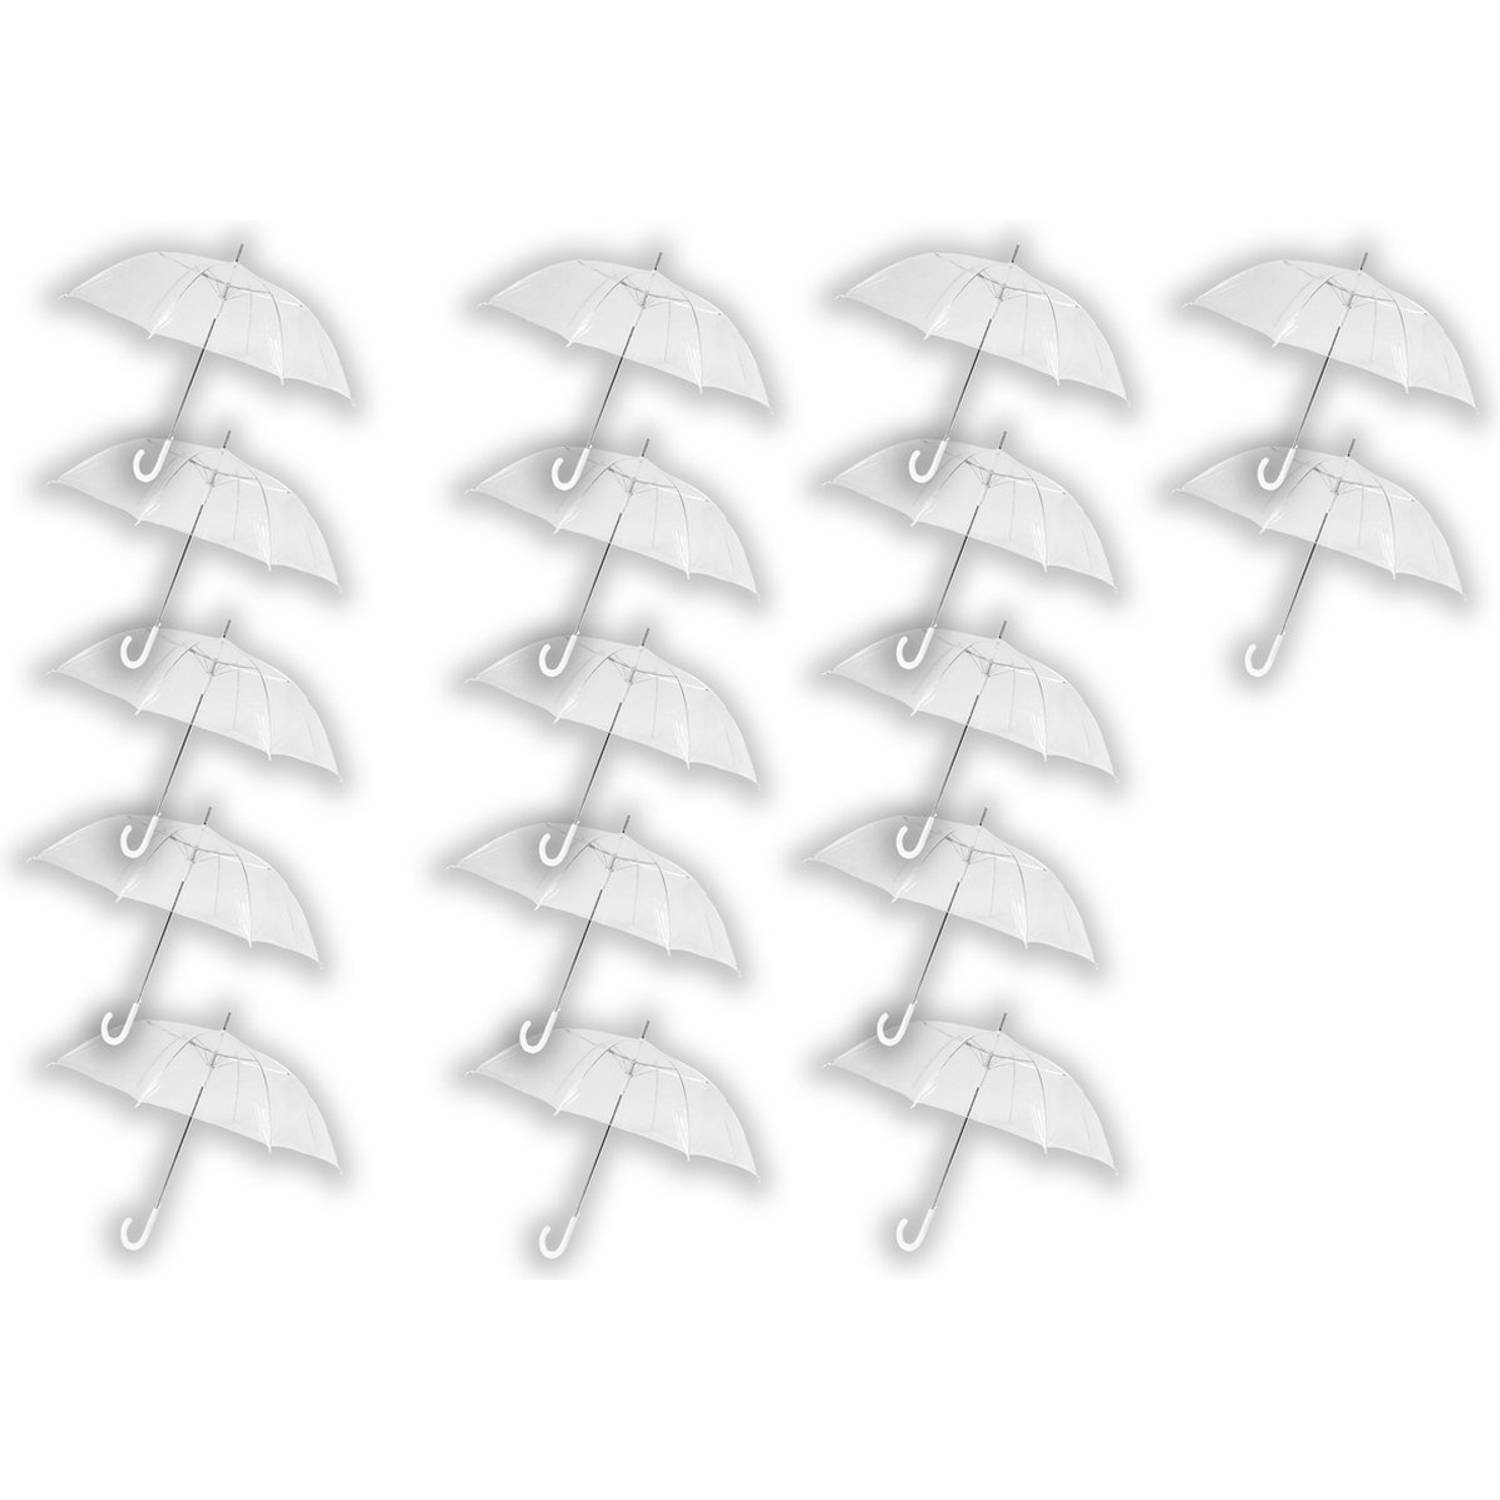 17 stuks Paraplu transparant plastic paraplu's 100 cm - doorzichtige paraplu - trouwparaplu - bruidsparaplu - stijlvol - bruiloft - trouwen - fashionable - trouwparaplu